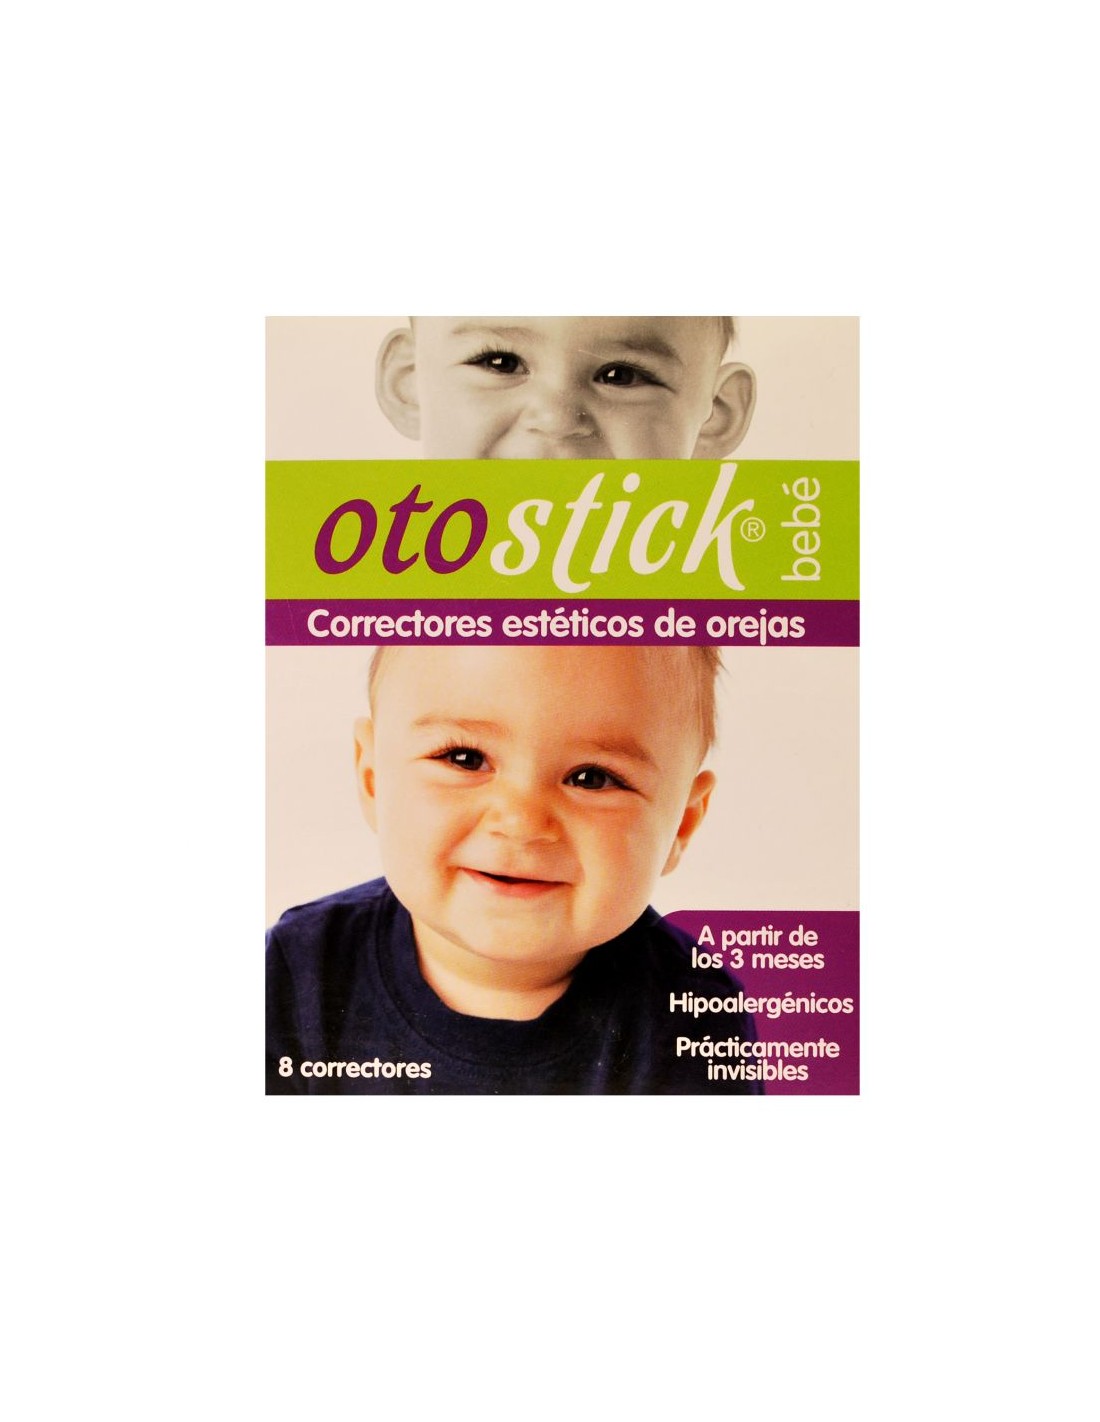 Corrector Estético de Orejas para Bebés Otostick